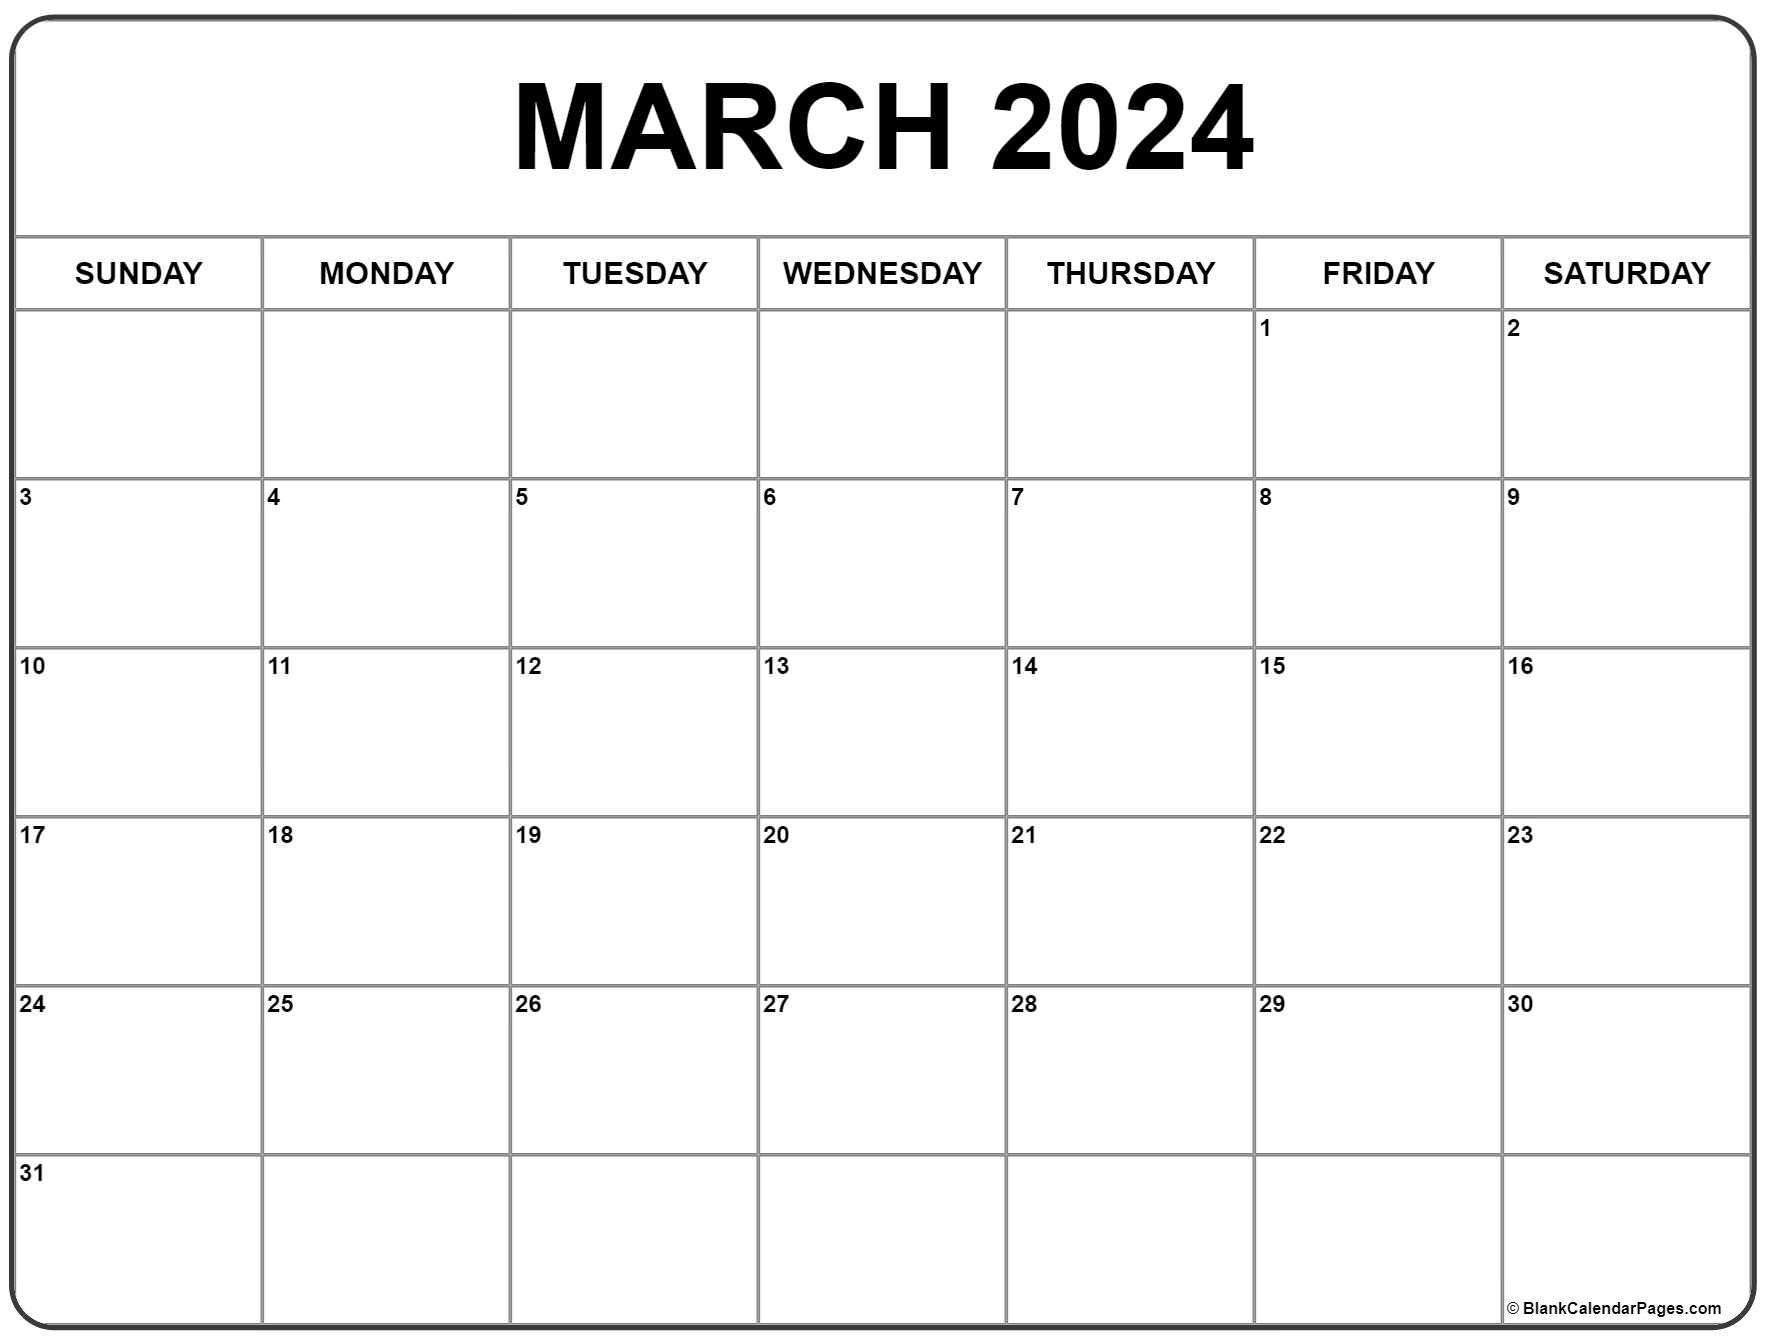 March Calendar 2022 Template March 2022 Calendar | Free Printable Calendar Templates